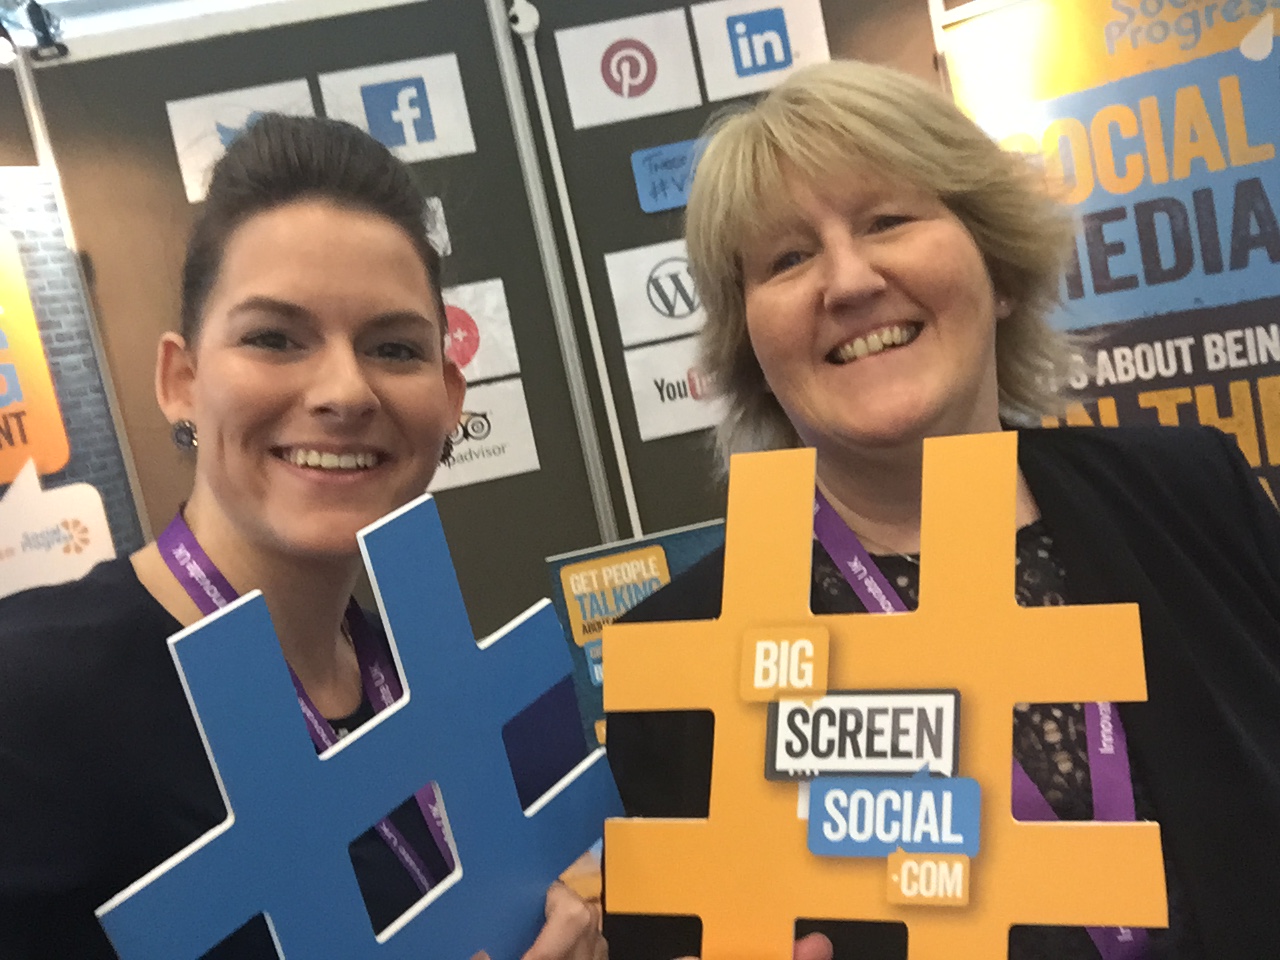 Social Progress Ltd - Venturefest Yorkshire 2016 - Big Screen Social - Social Media Training Yorkshire